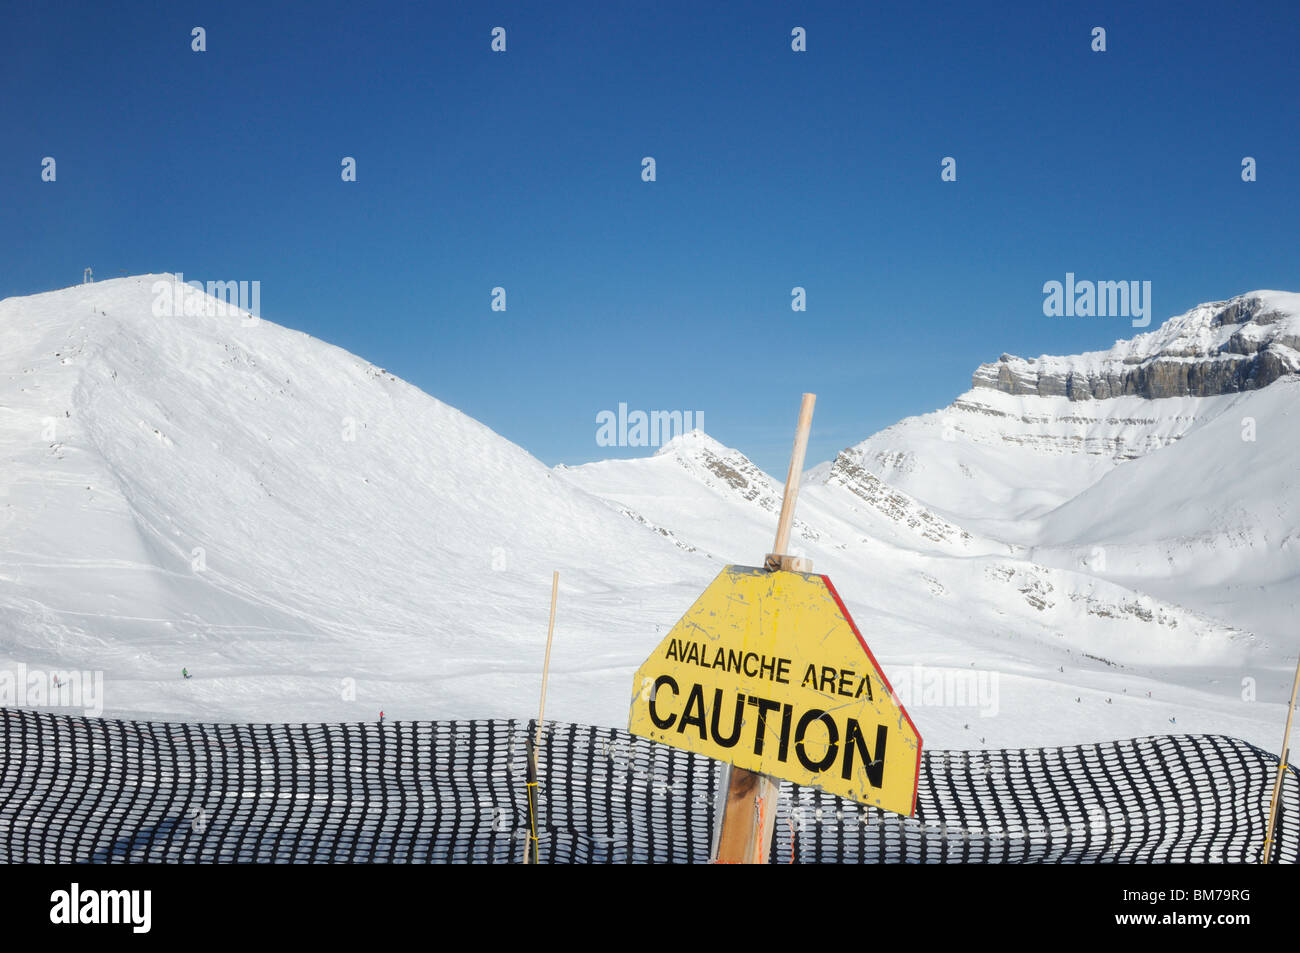 Avalanche area caution sign at Lake Louise Ski Resort - Banff National Park, Alberta, Canada Stock Photo